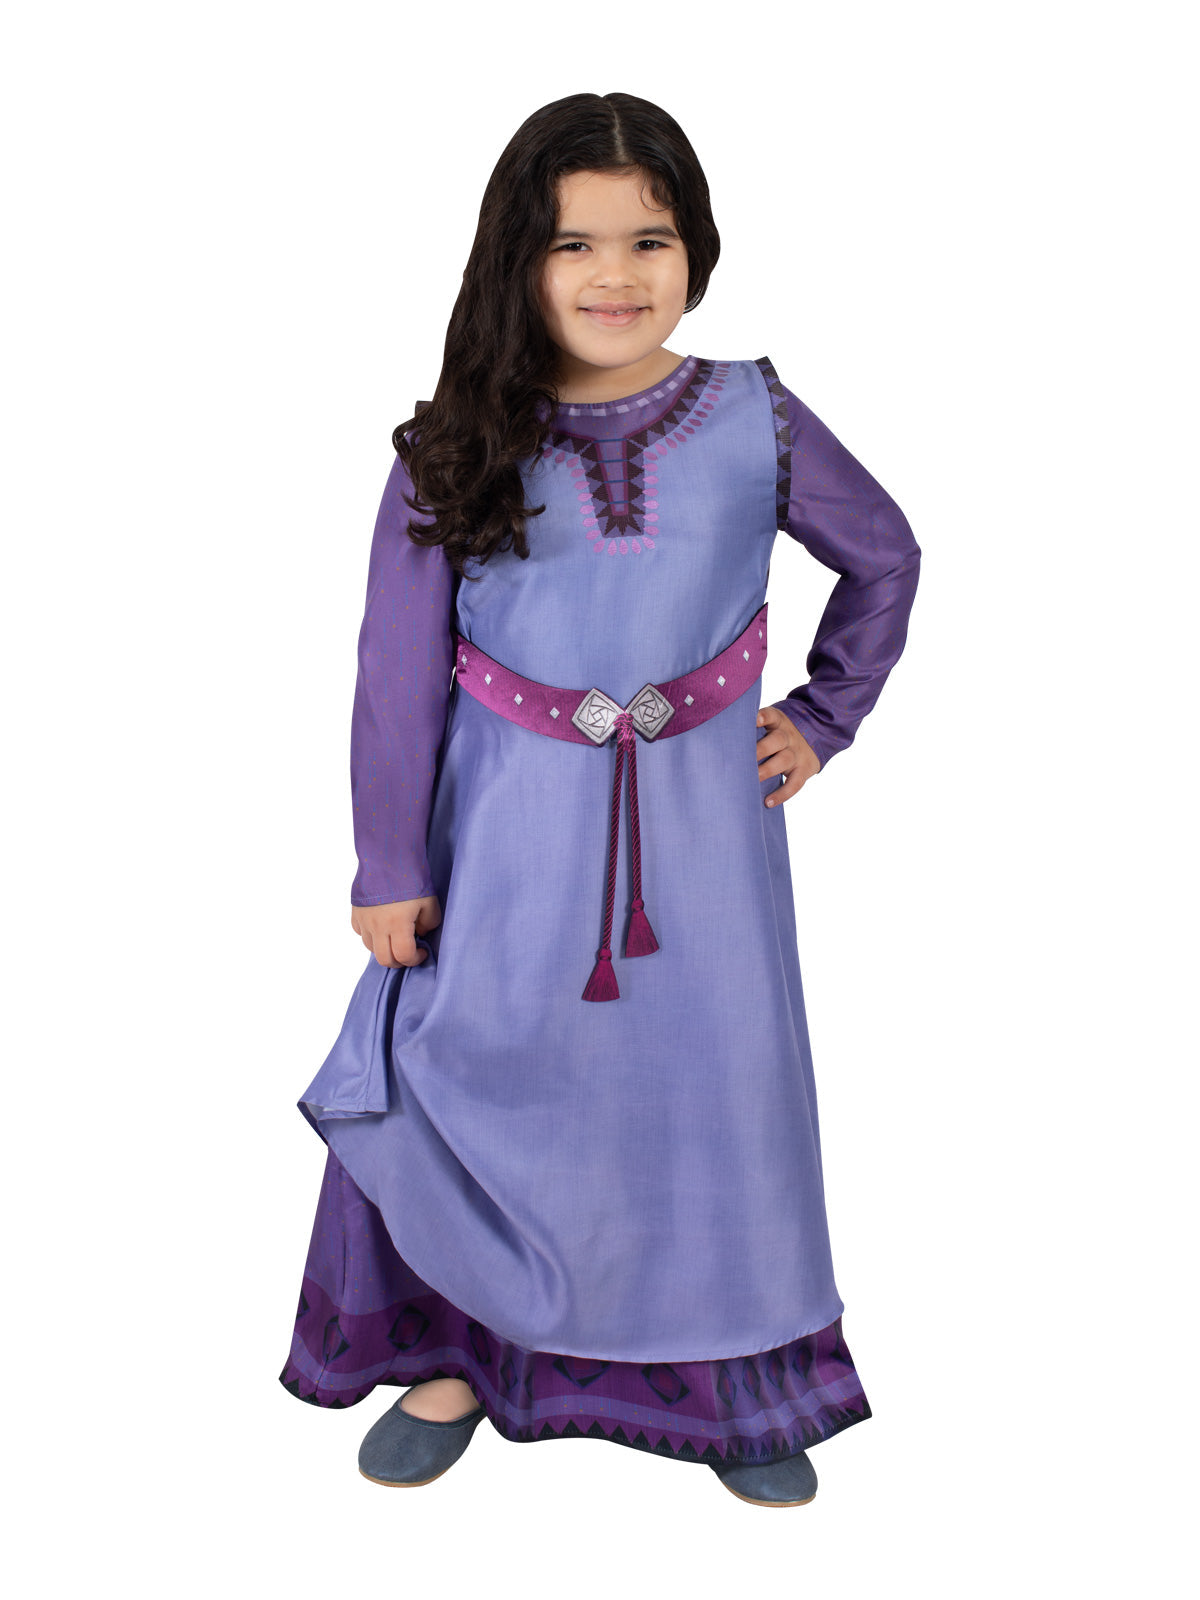 Cosplay Wish Movie Princess Asha Dress Kids Girls Dress Skirts